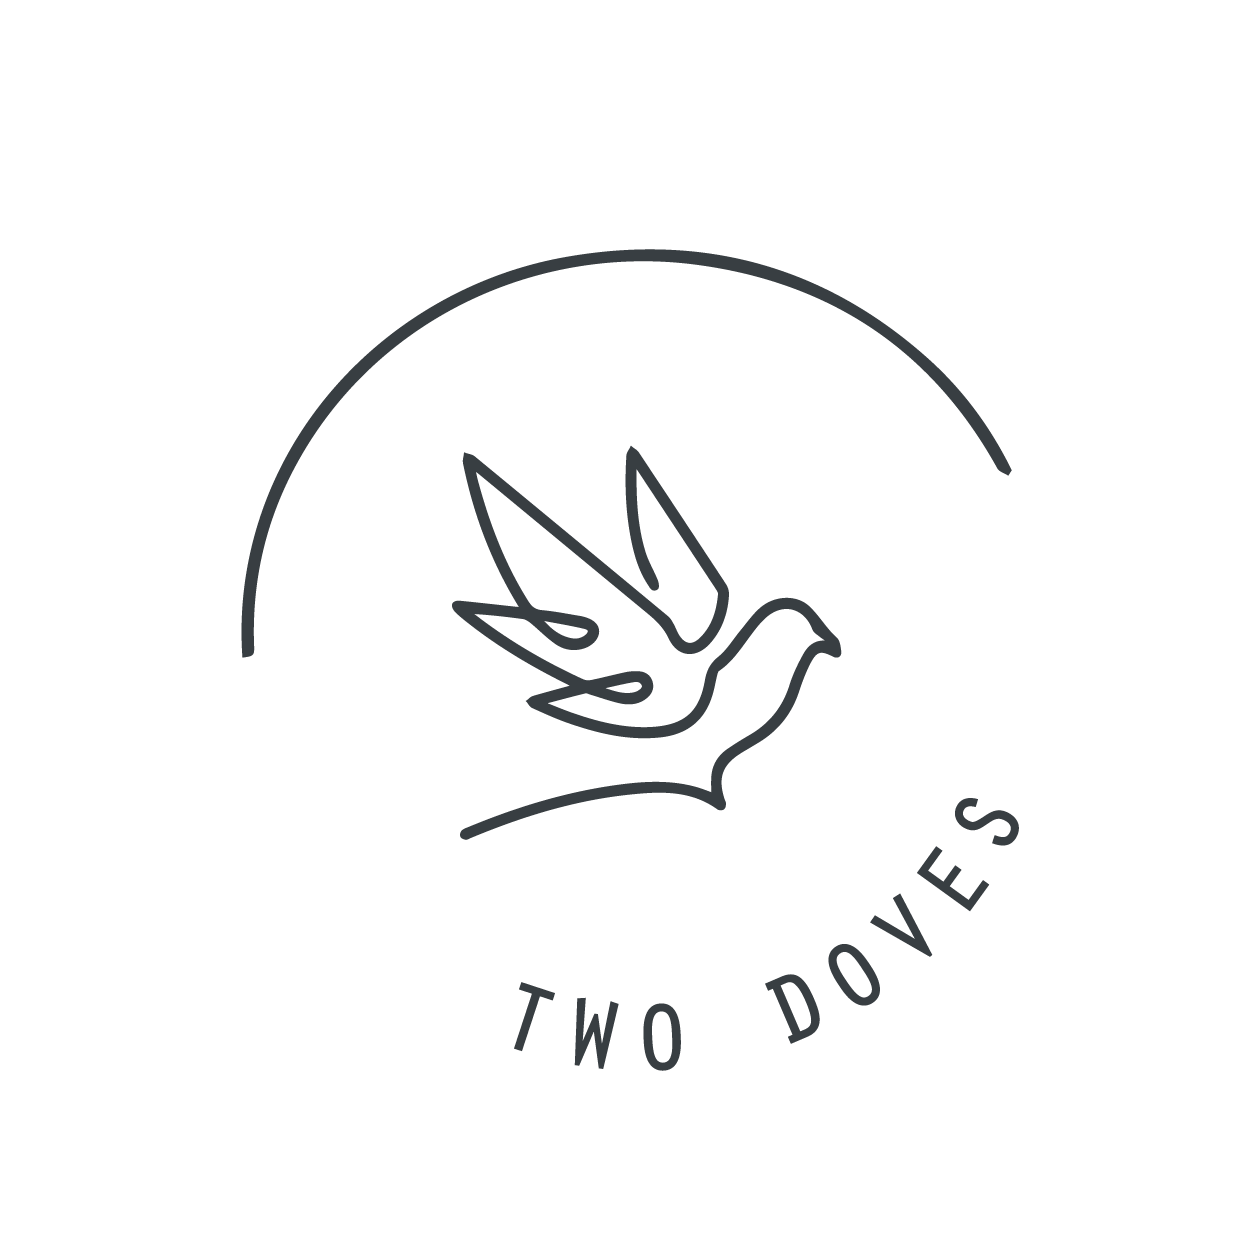 2 Doves